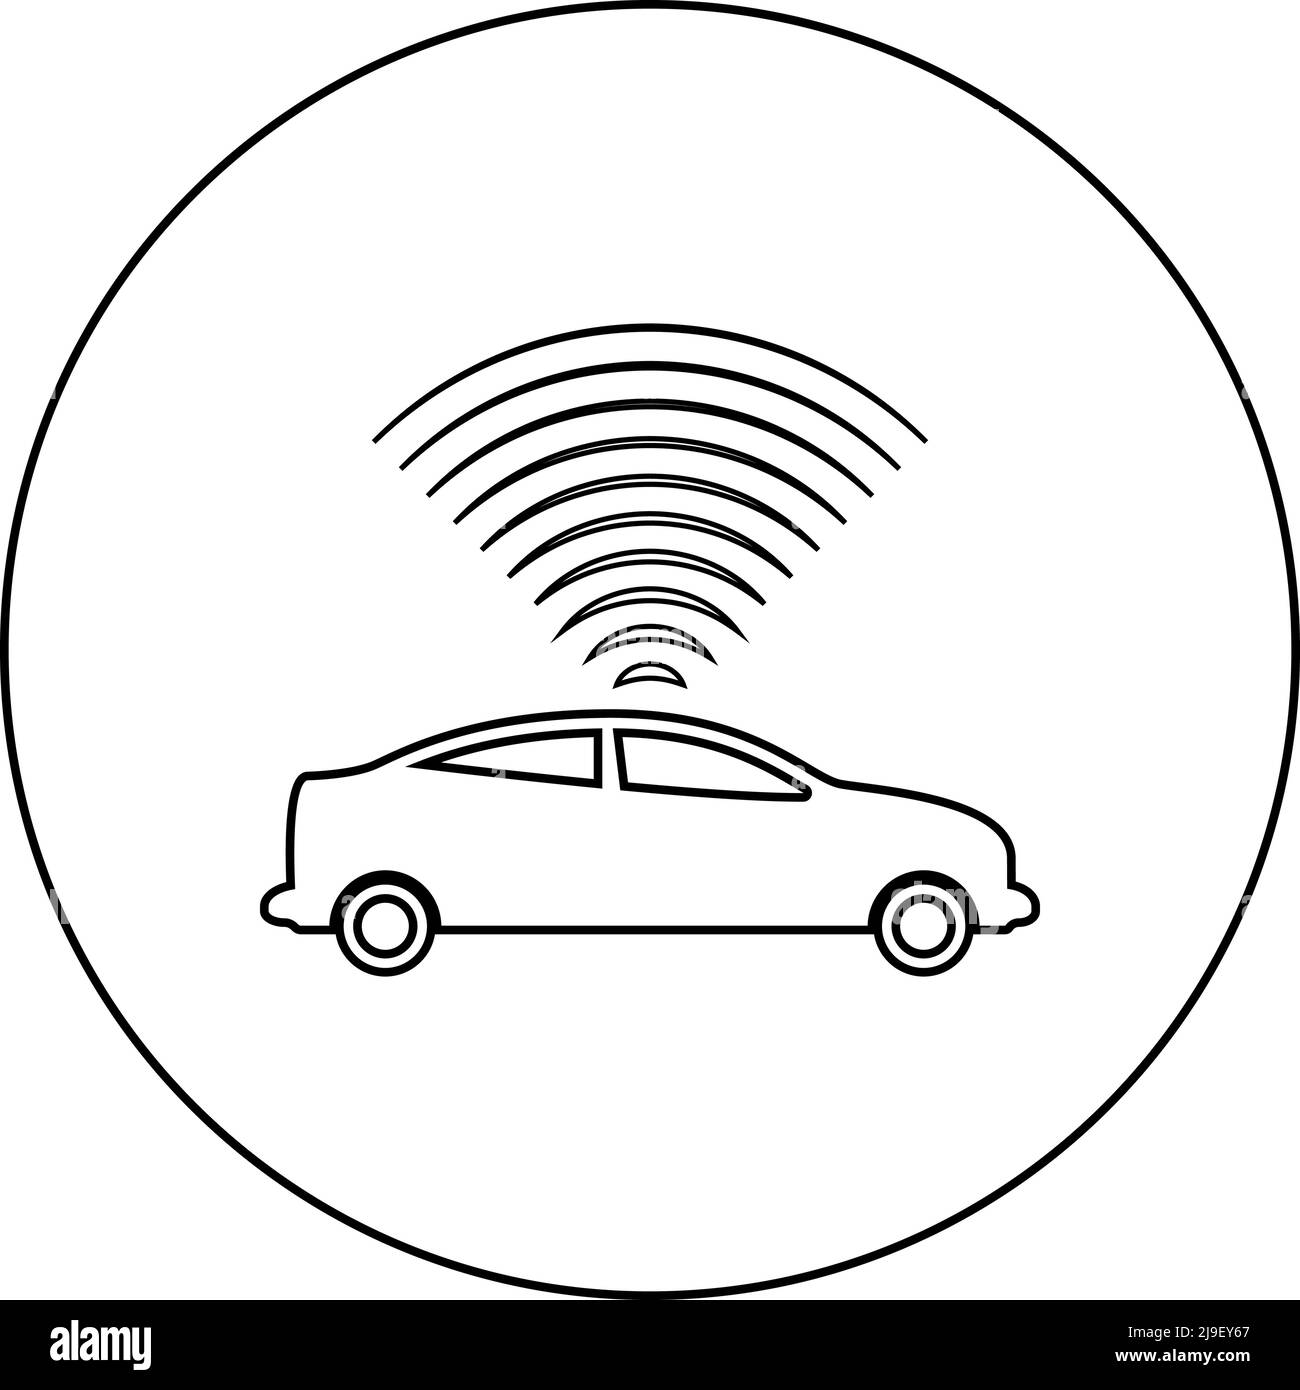 Car radio signals sensor smart technology autopilot up direction icon in circle round black color vector illustration image outline contour line thin Stock Vector